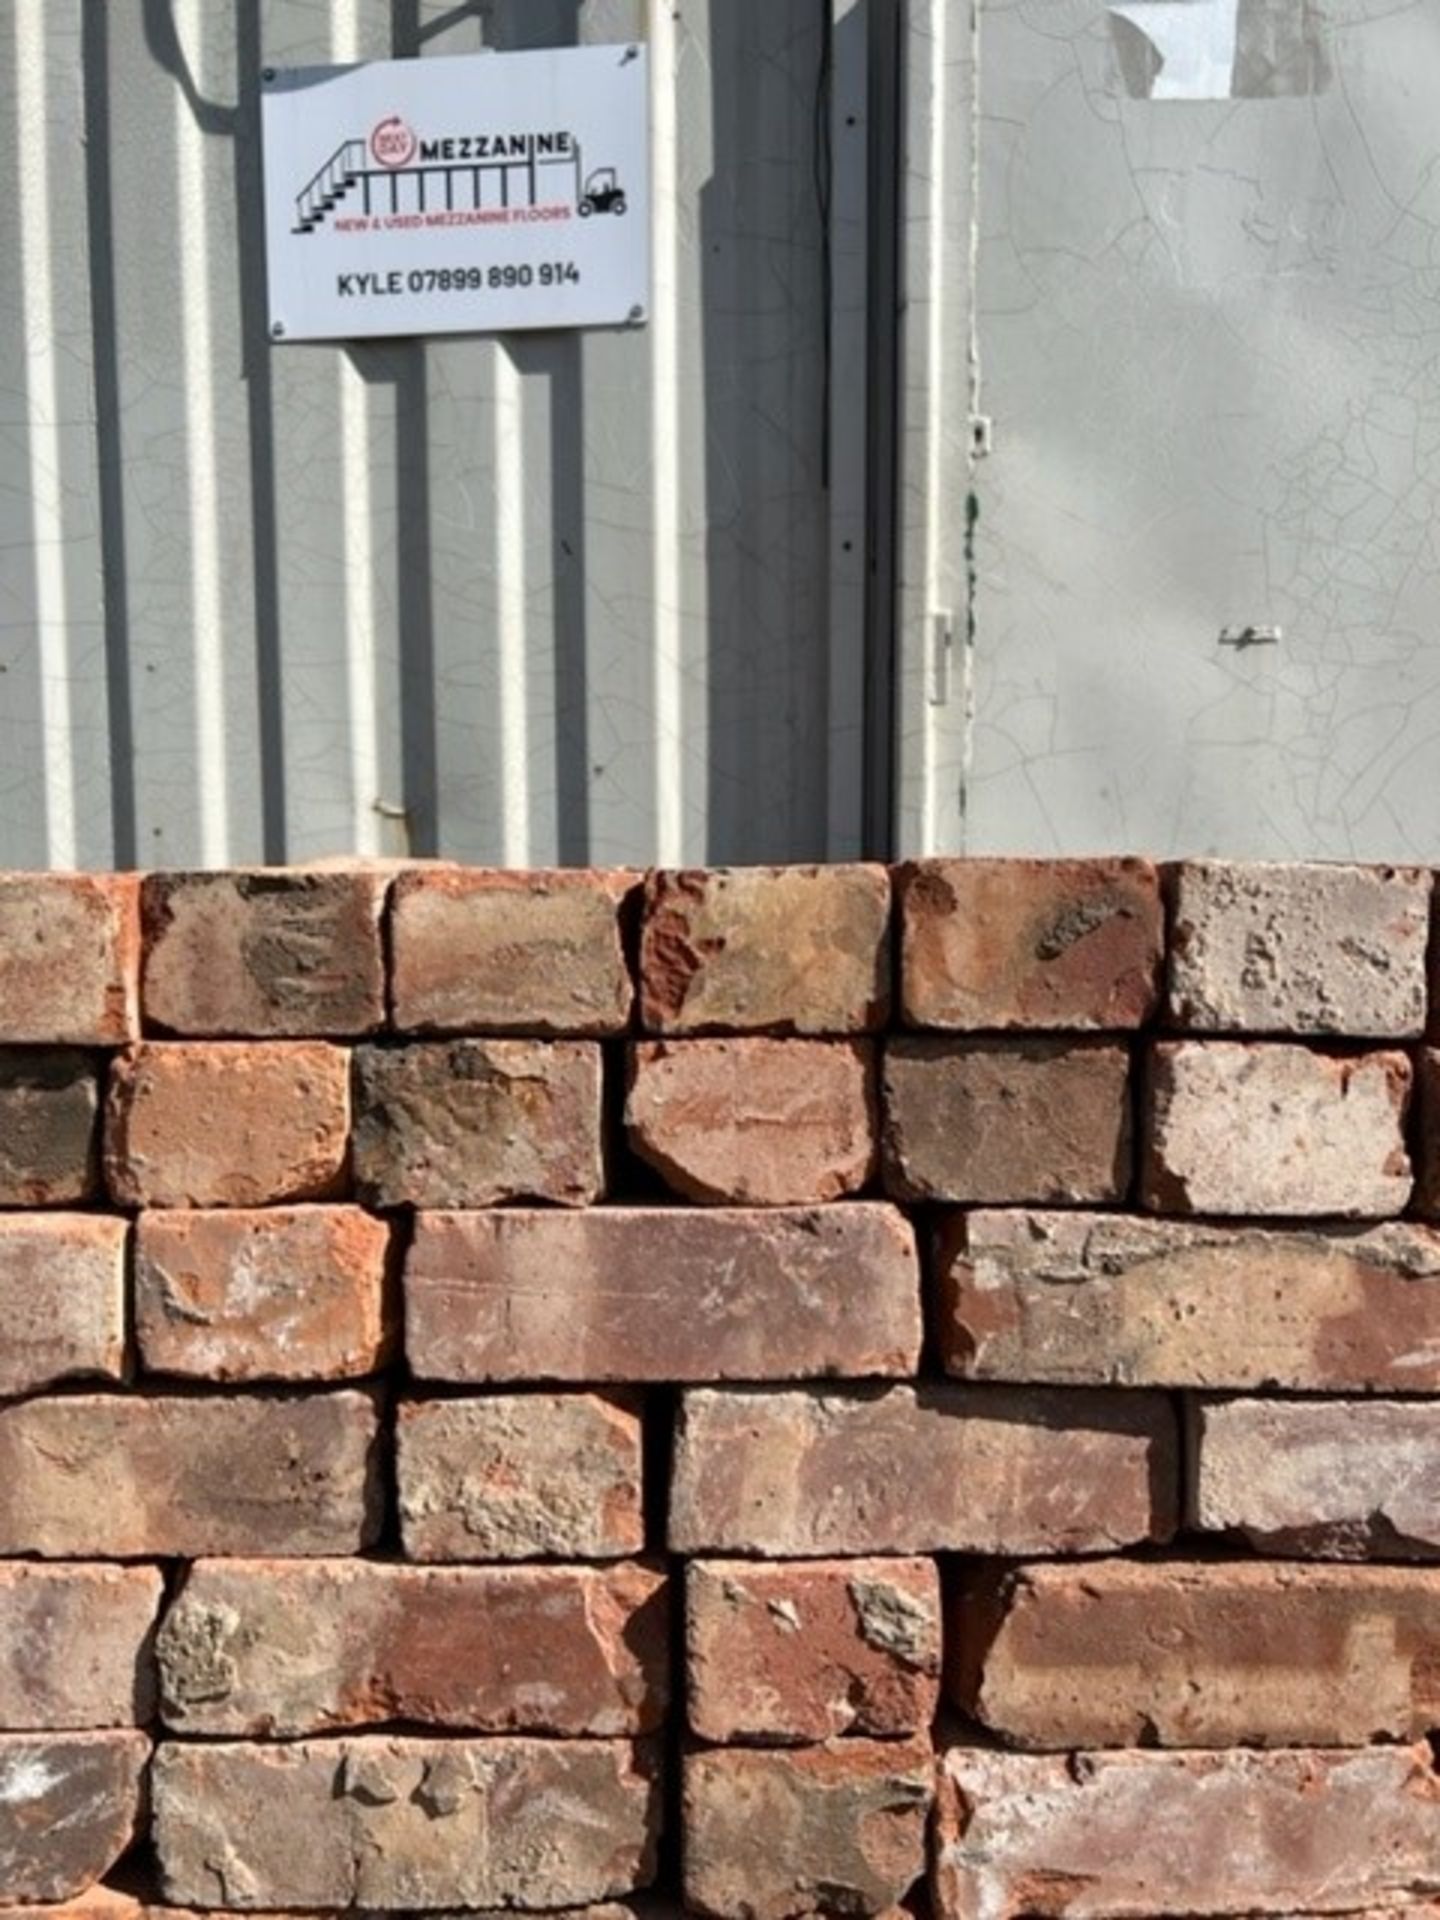 £960 Reclaimed Handmade Bricks 400 Bricks Per Pallet 1 Pallet Per Lot 5 Lots In Total All Cleaned Up - Image 4 of 4